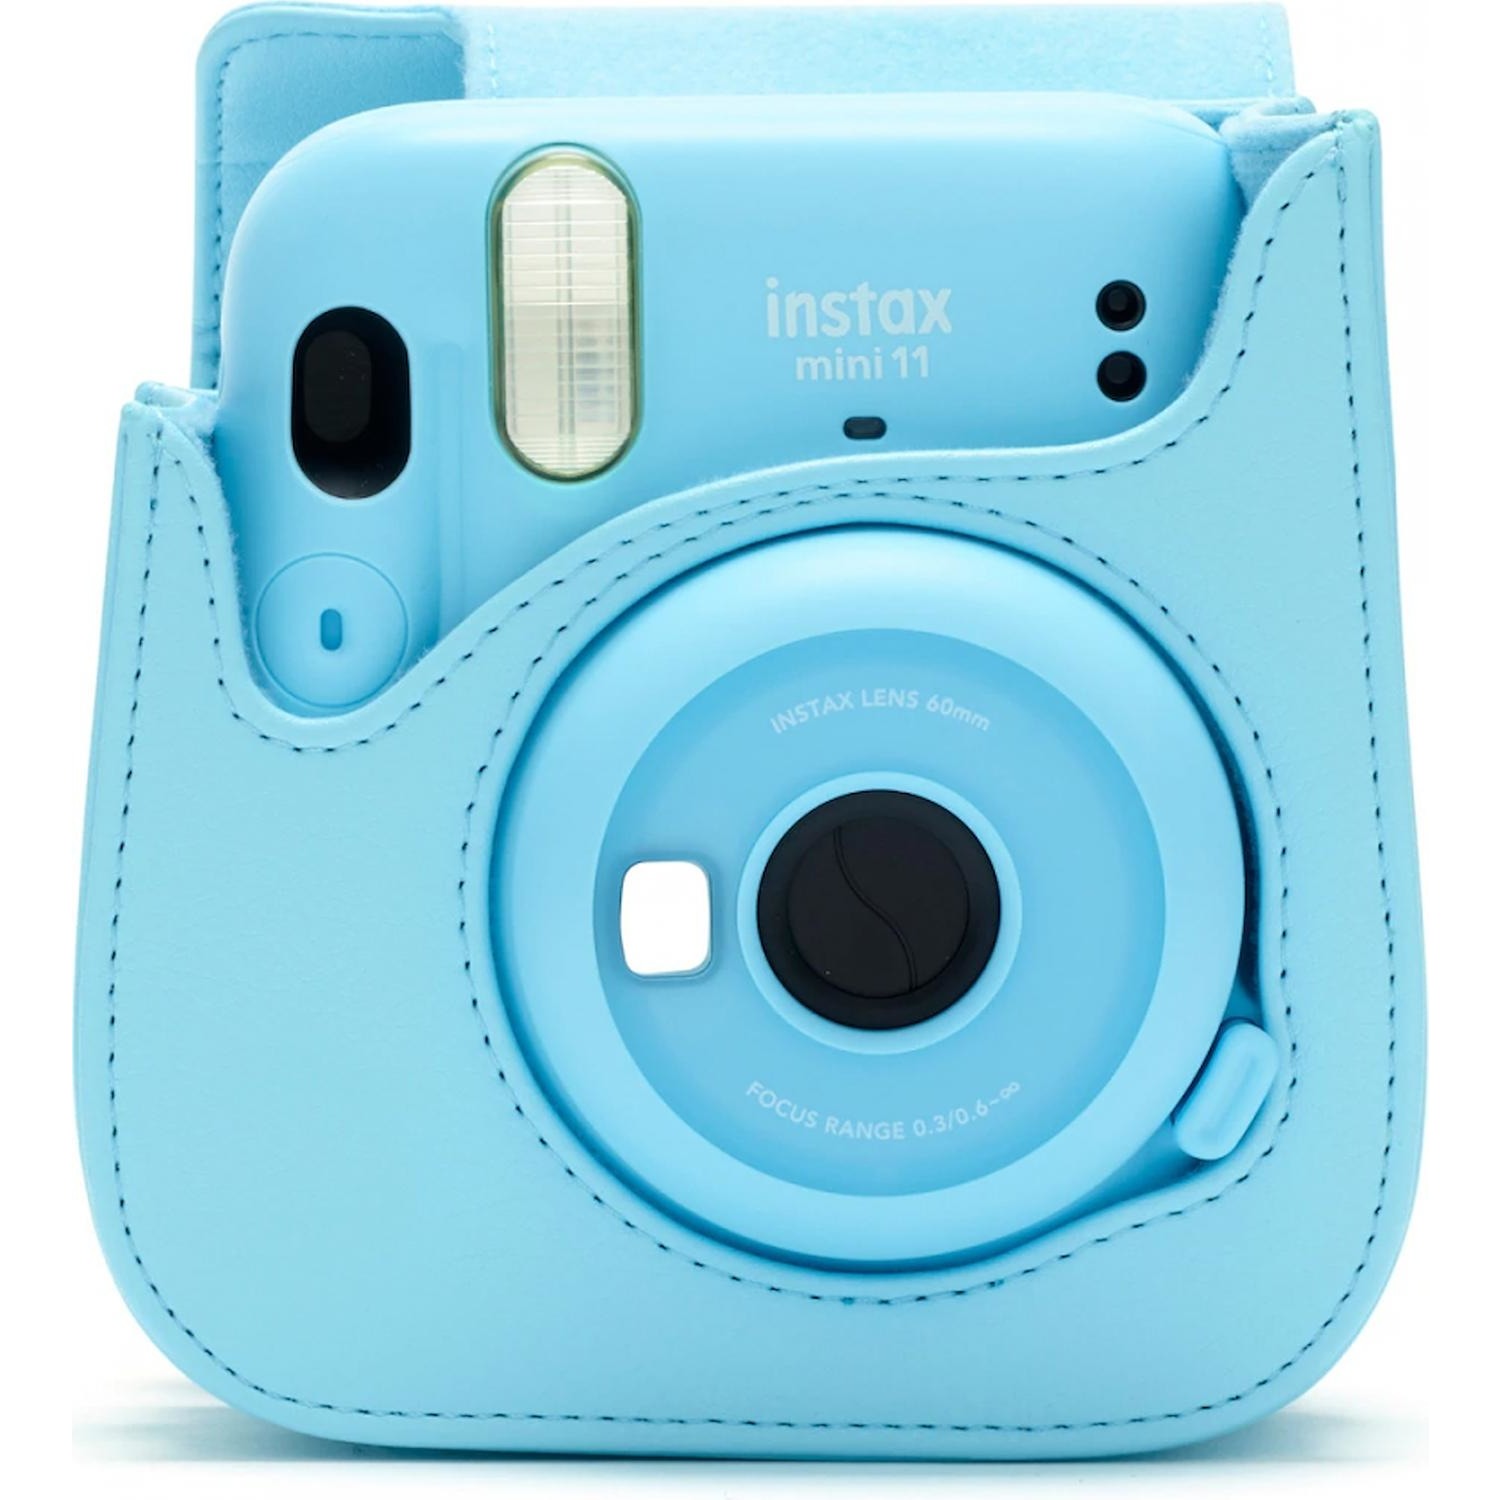 Fotocamera istantanea Fujifilm Mini11 bundle kit colore Sky blue - DIMOStore